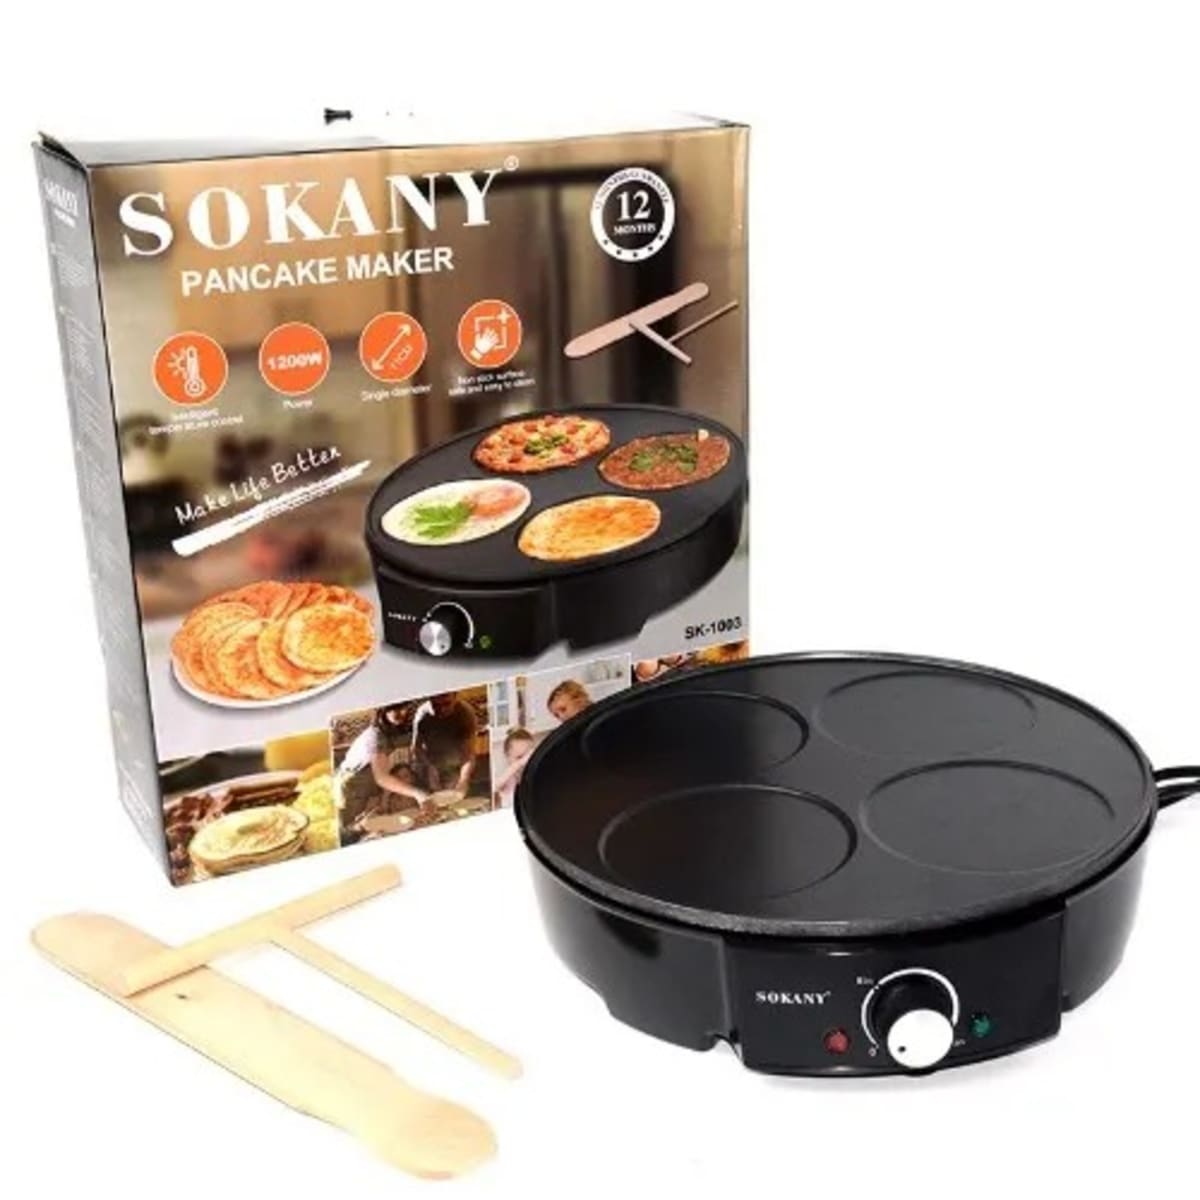 Sokany Electric Pancake Maker - 4 Portions - 1,200W | Konga Online Shopping